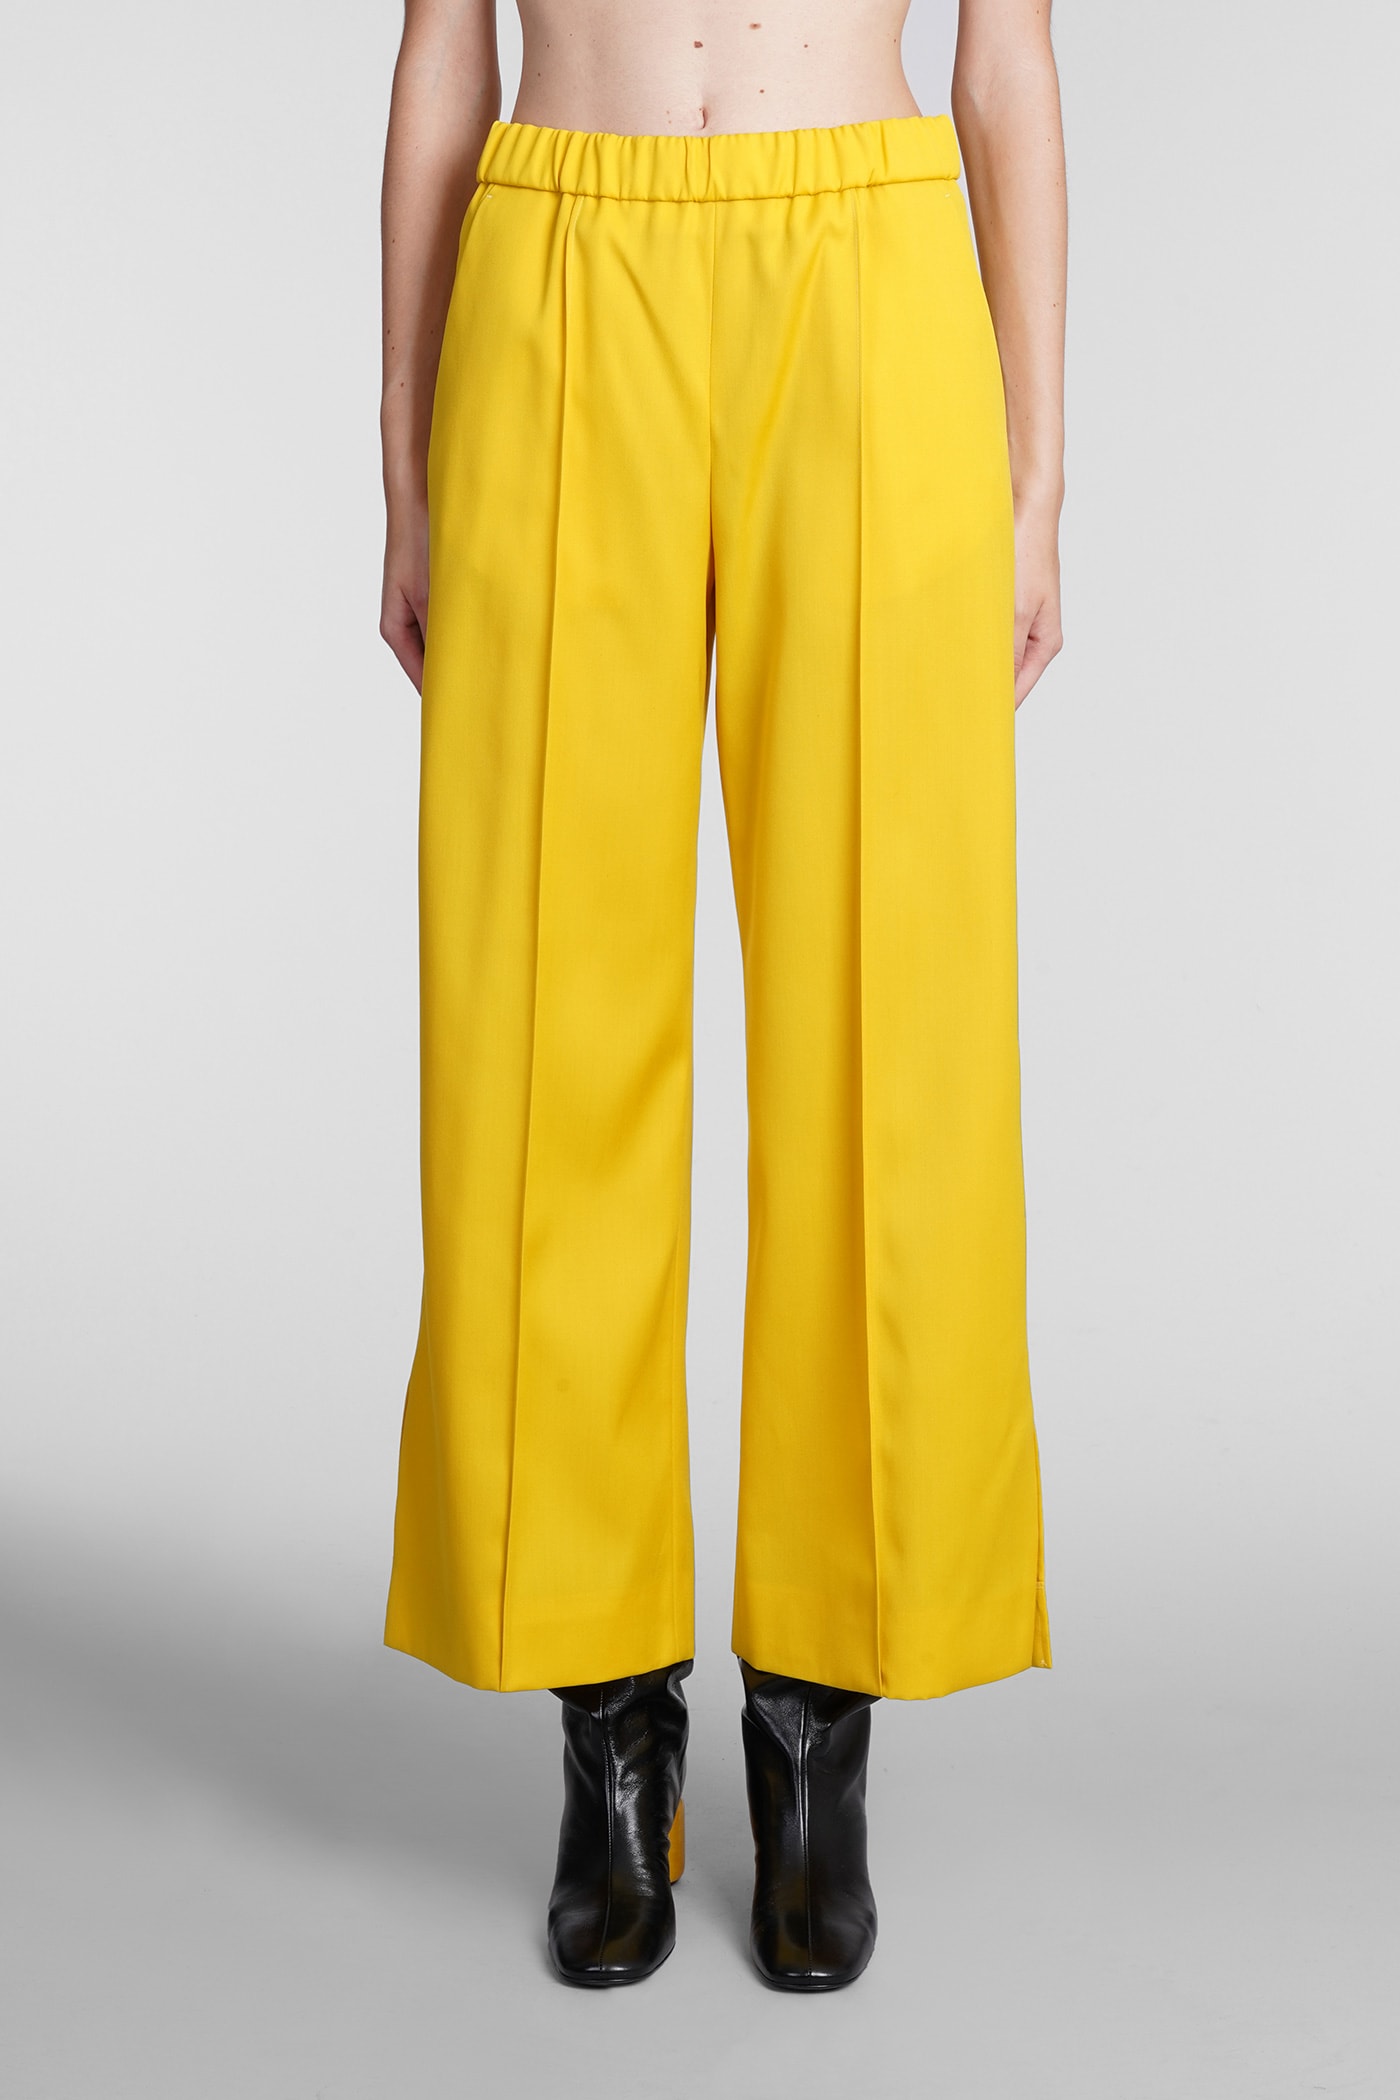 Jil Sander Pants In Yellow Wool